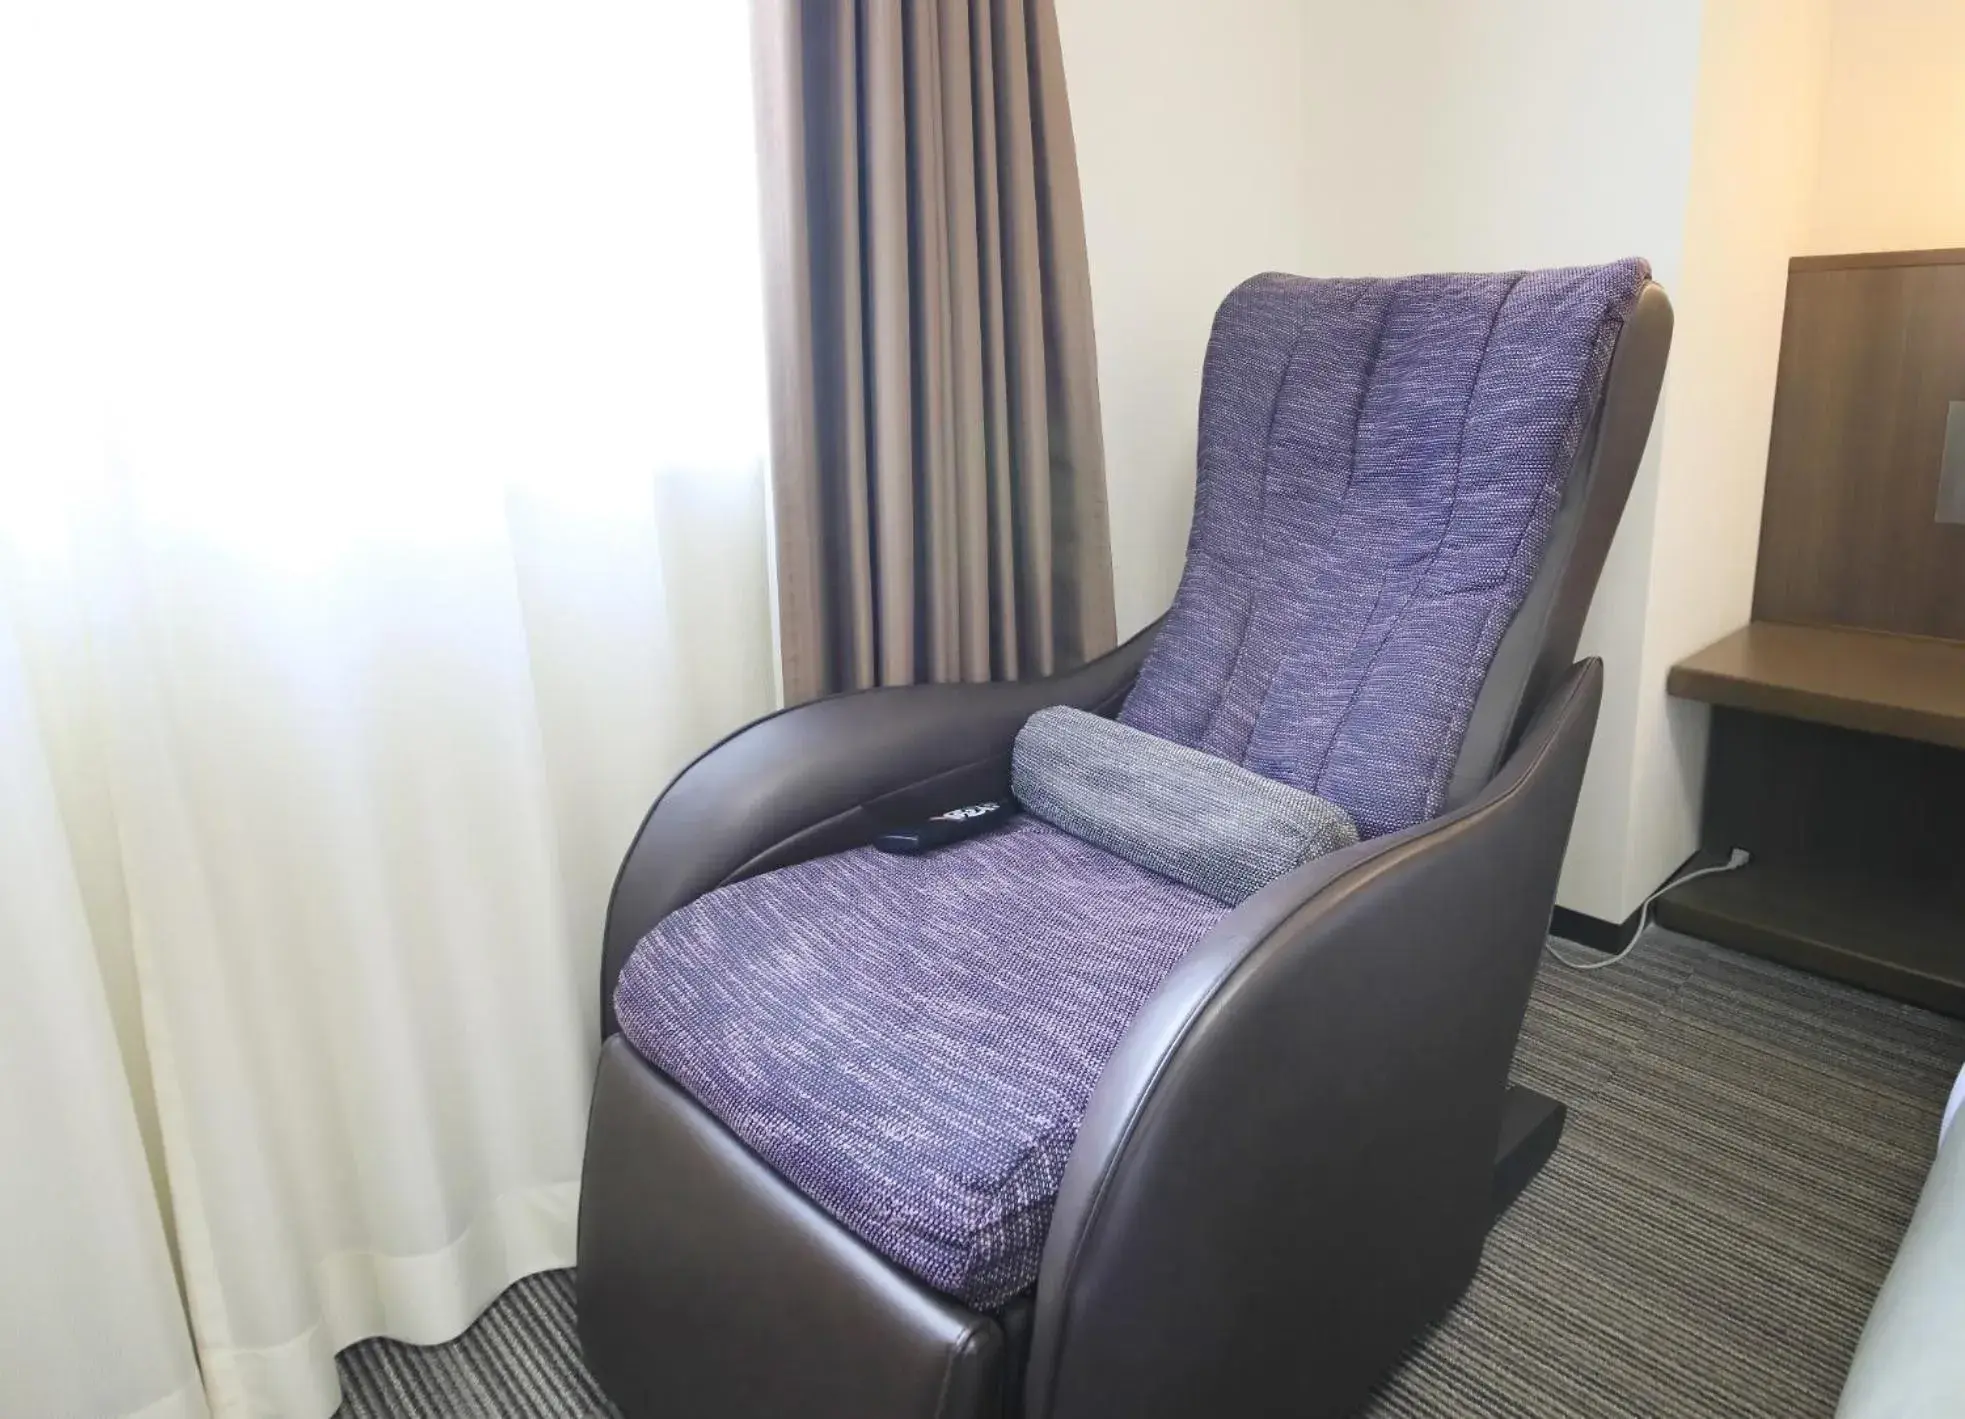 Other, Seating Area in Daiwa Roynet Hotel Kawasaki